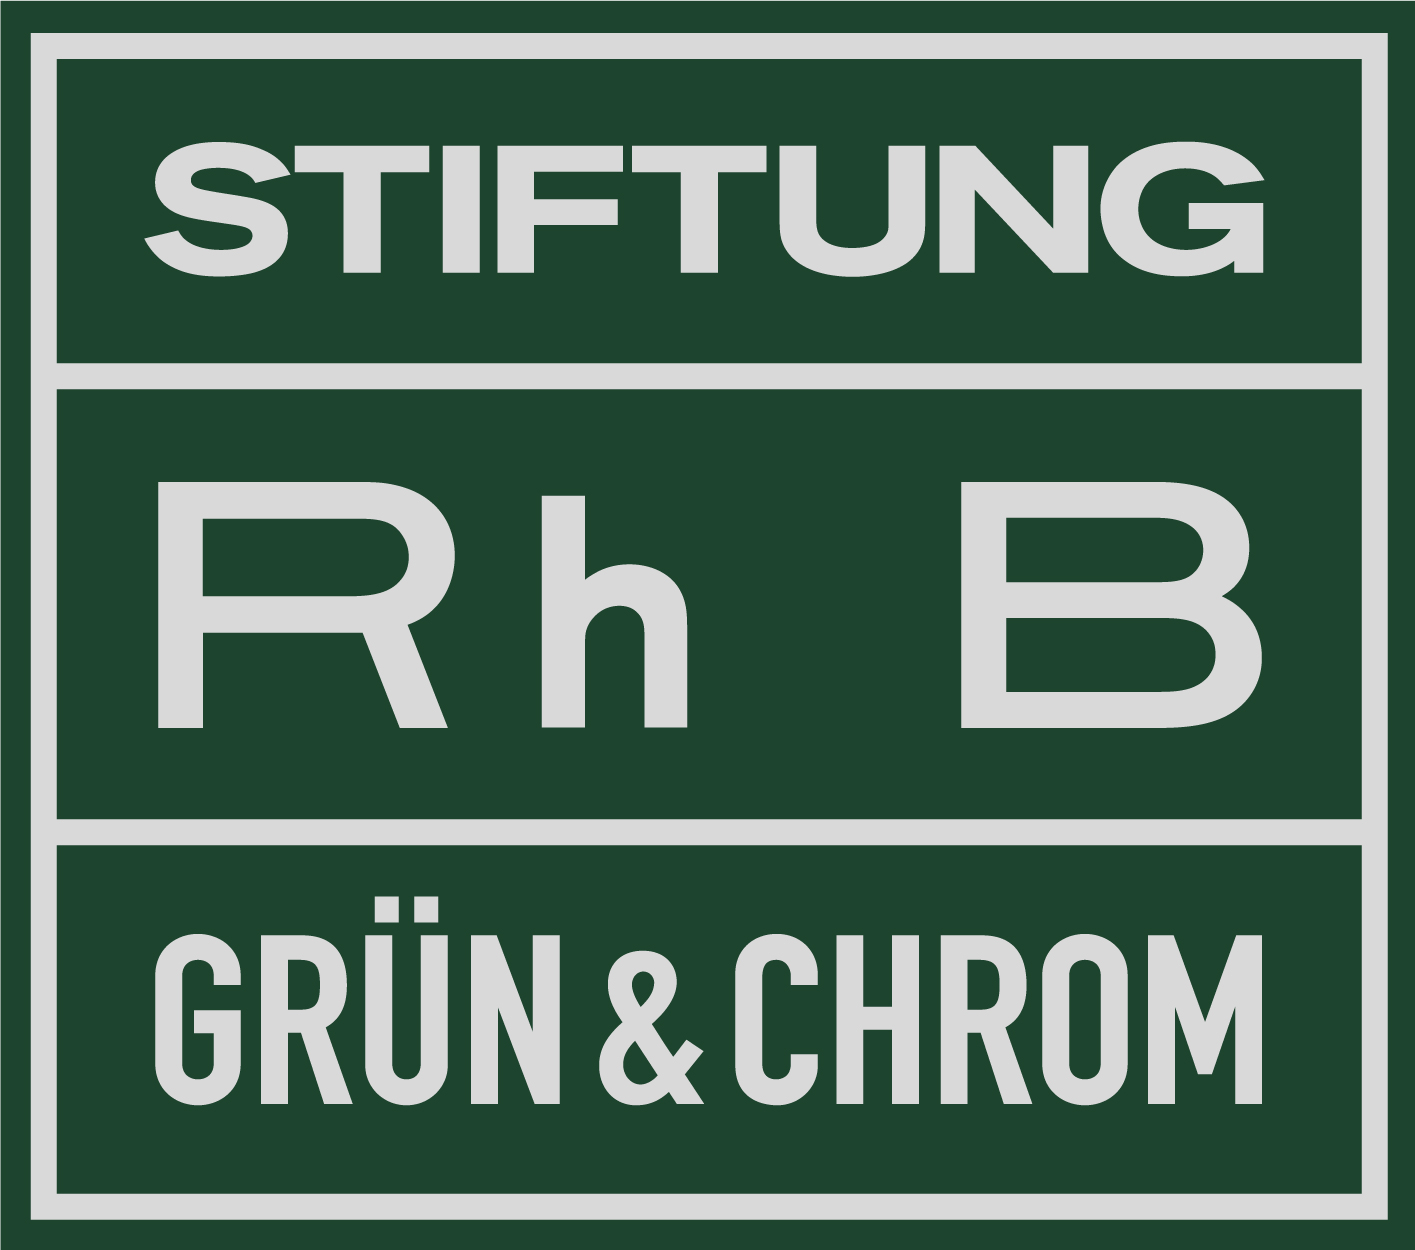 Stiftung GRÜN & CHROM